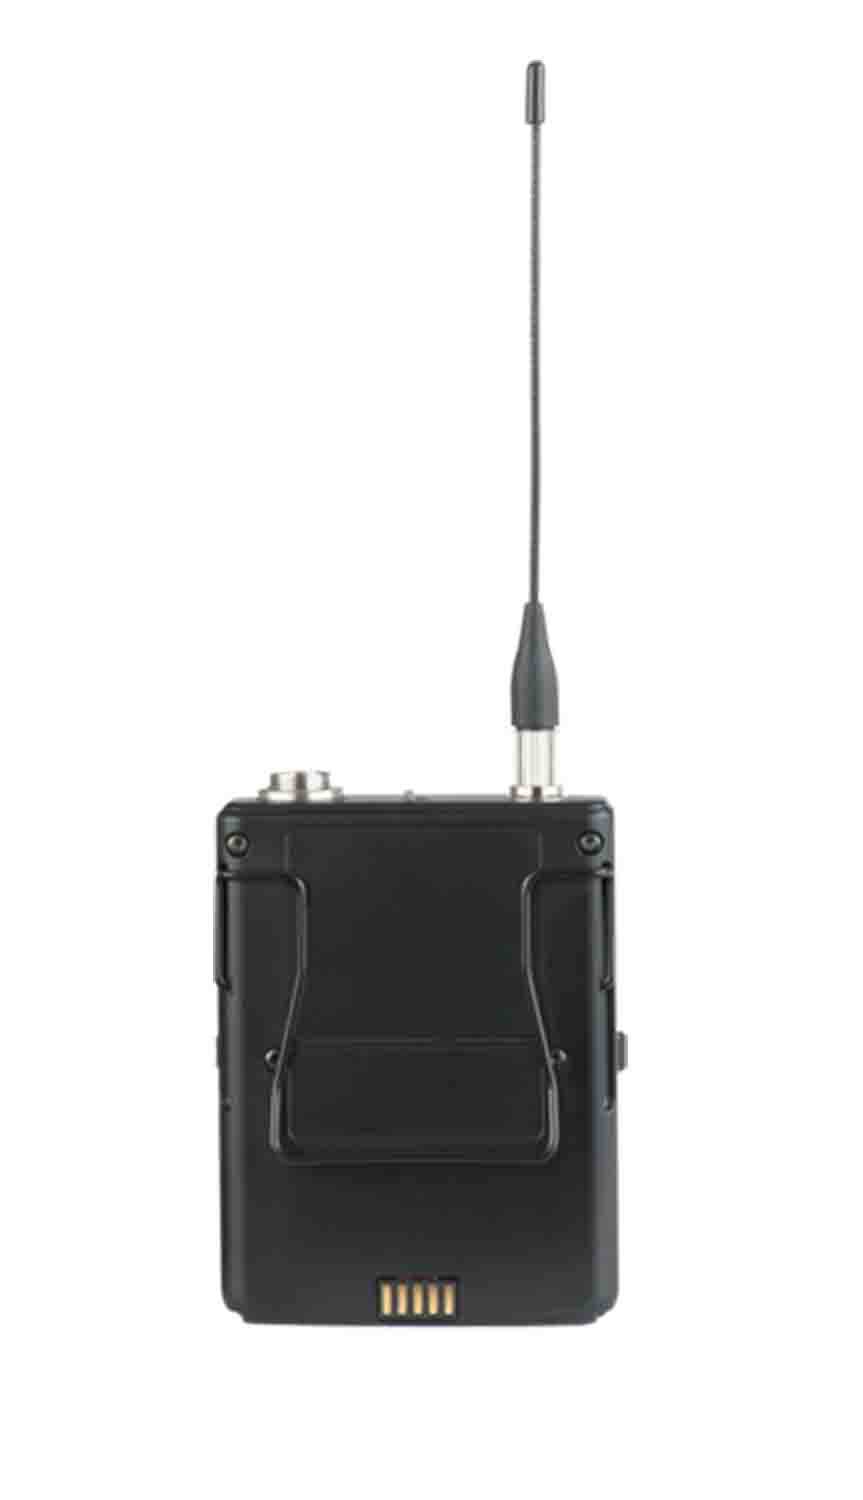 Shure ULXD1LEMO3 Digital Wireless Bodypack Transmitter with LEMO3 Connector - Hollywood DJ